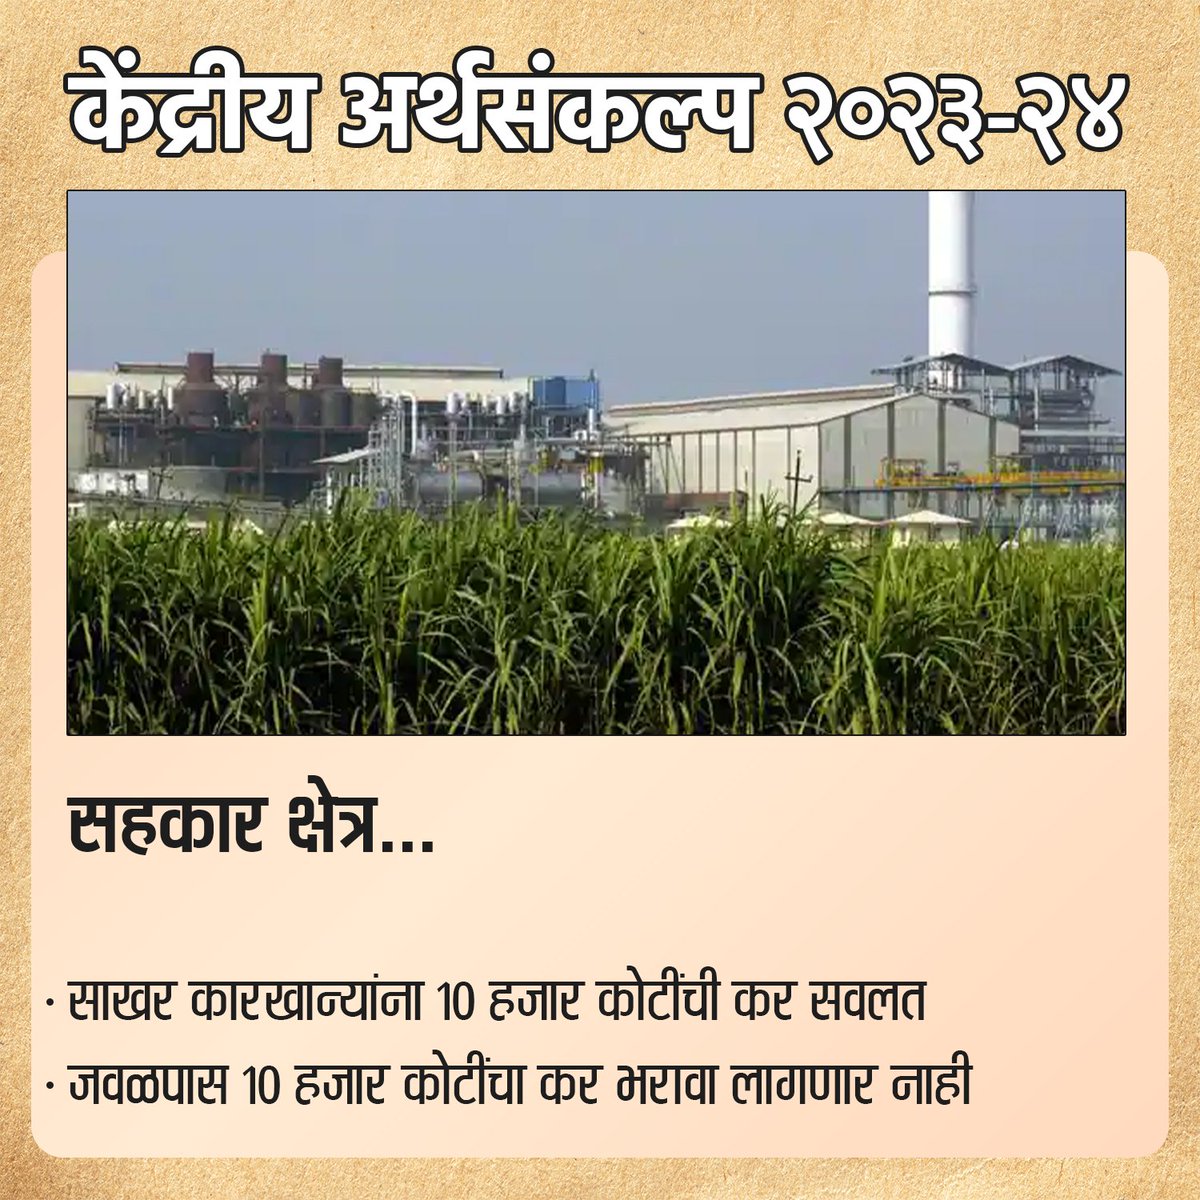 साखर कारखान्यांना 10 हजार कोटींची कर सवलत
.
.
#Budget2023  #Budget  #BudgetSession2023 #Maharashtra #maharashtratoday